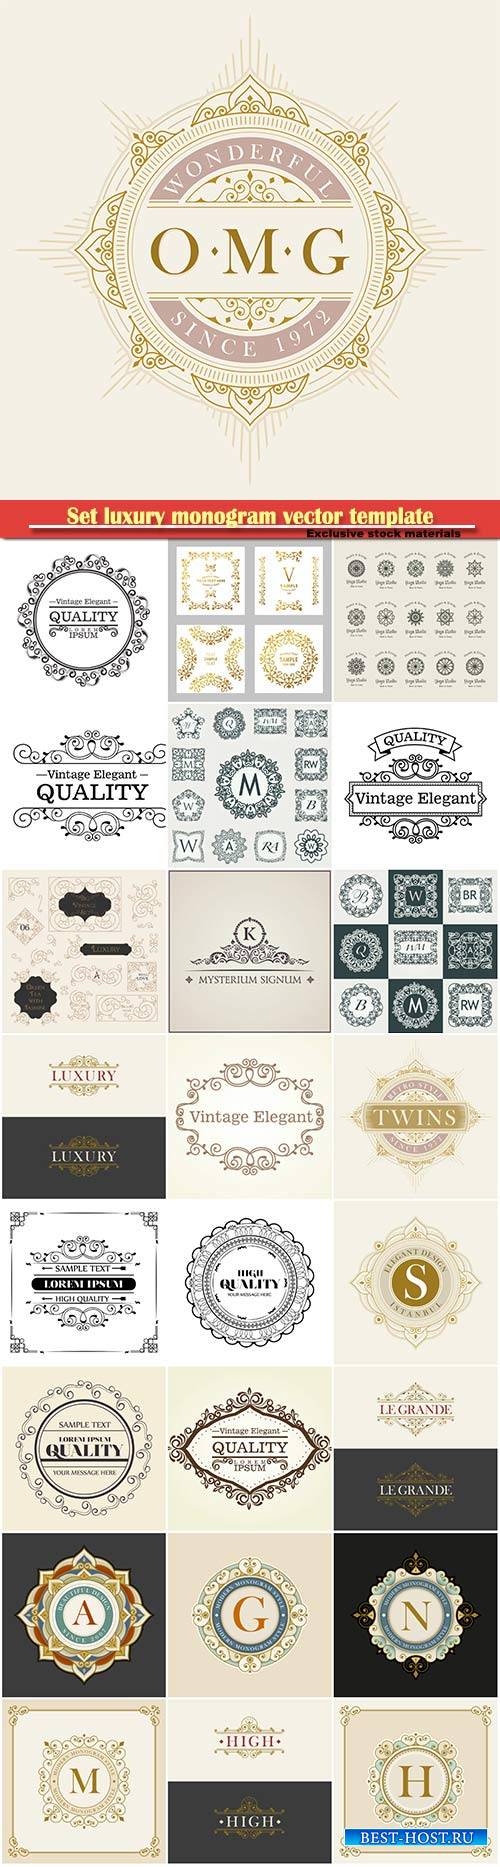 Set luxury monogram vector template, logos, badges, symbols # 4